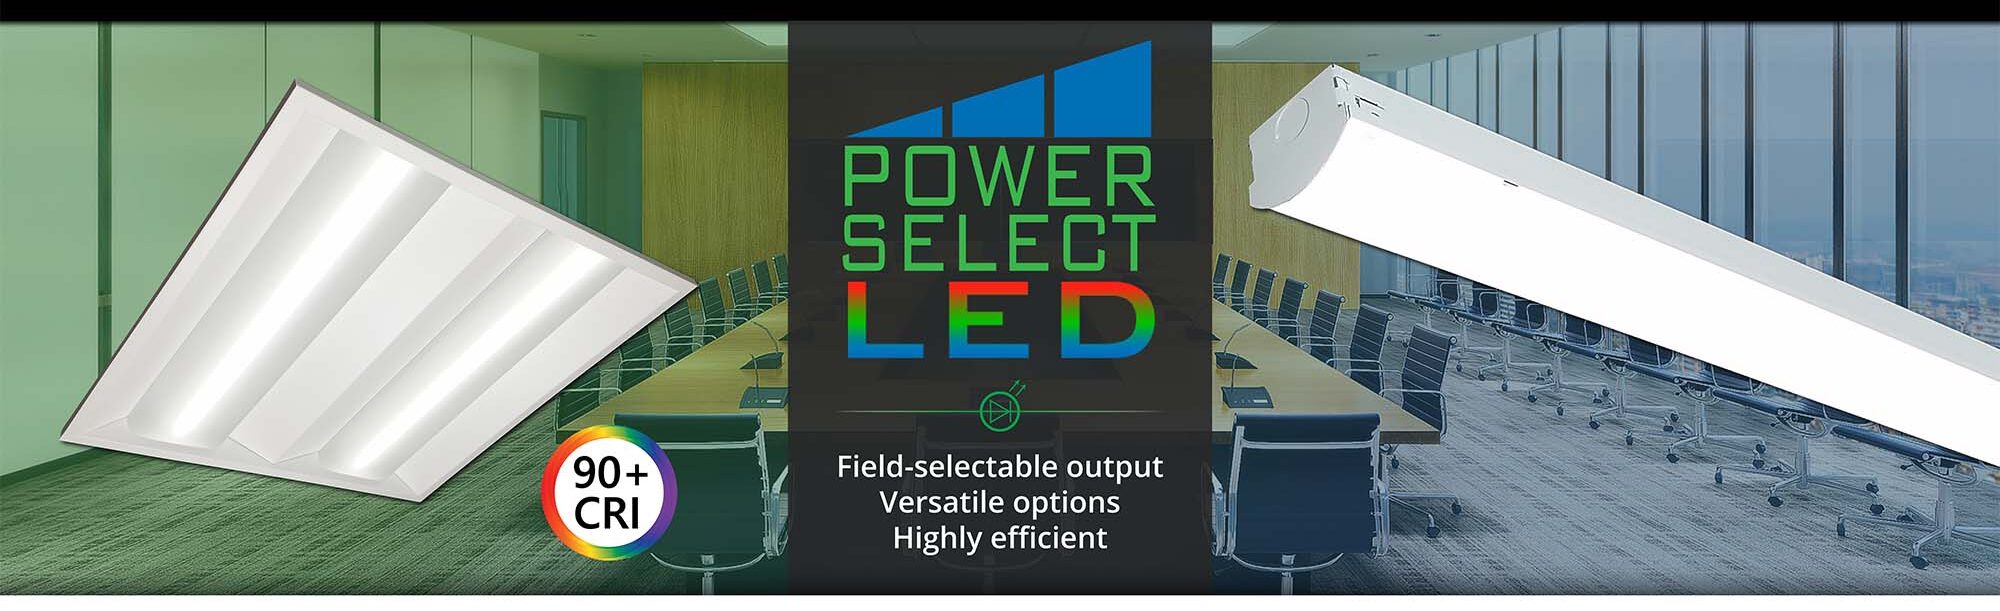 Power Select LED